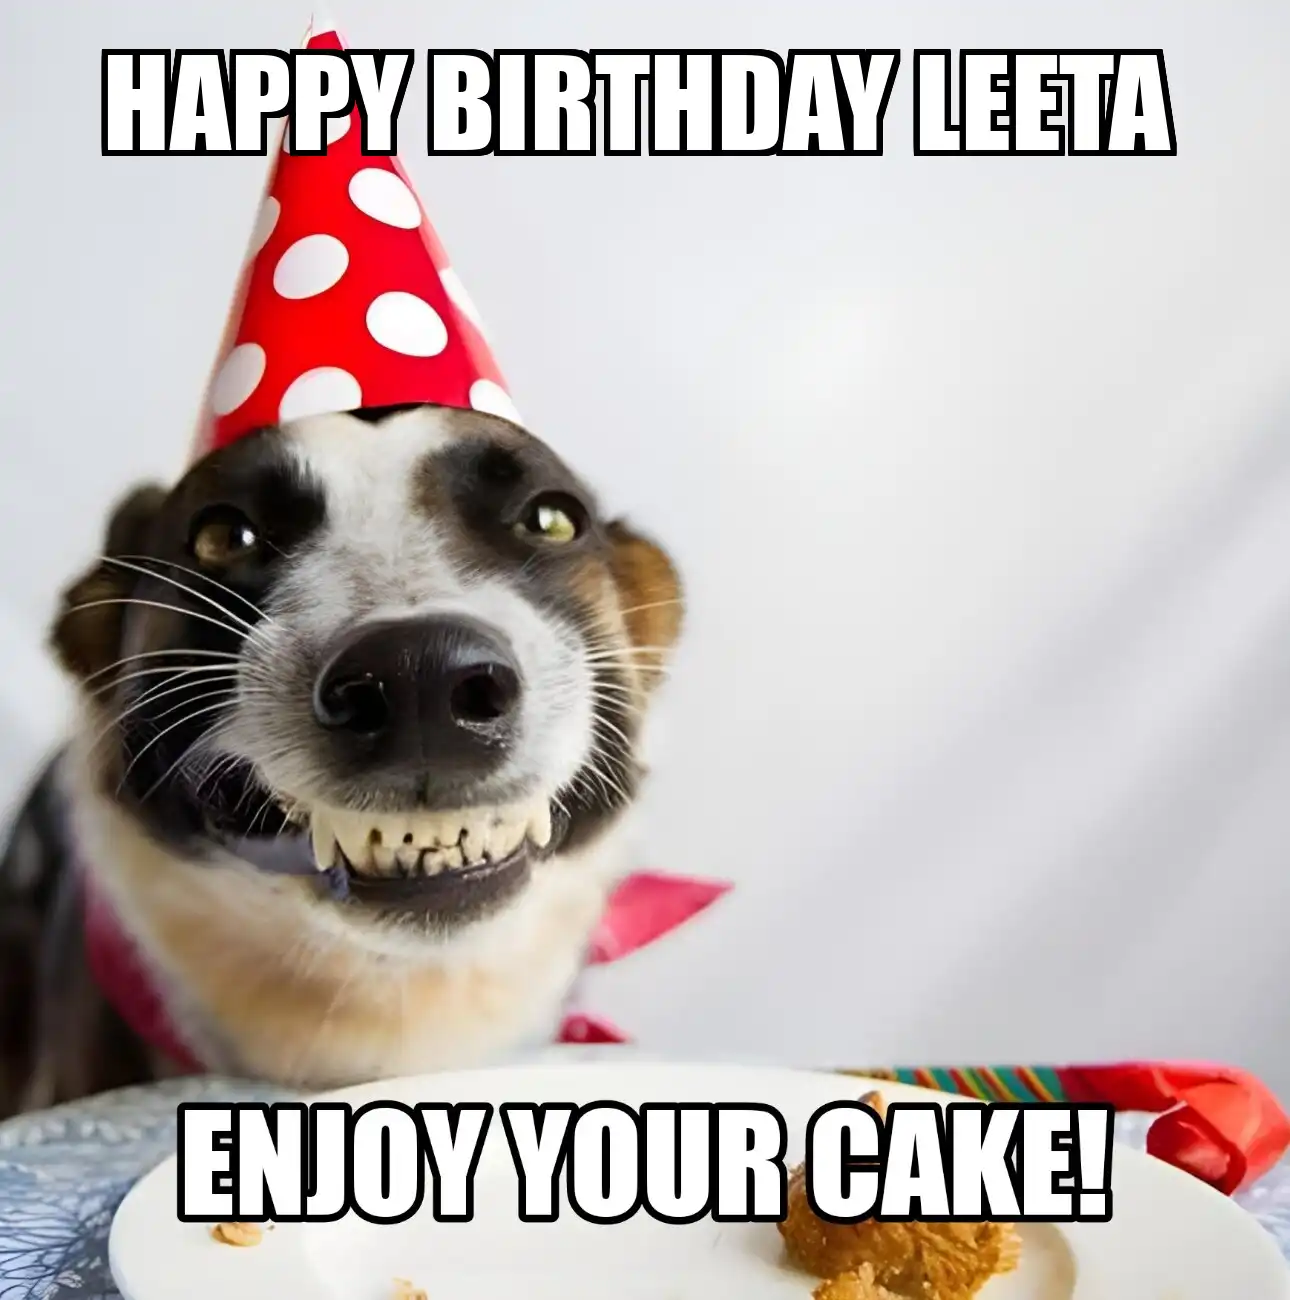 Happy Birthday Leeta Enjoy Your Cake Dog Meme